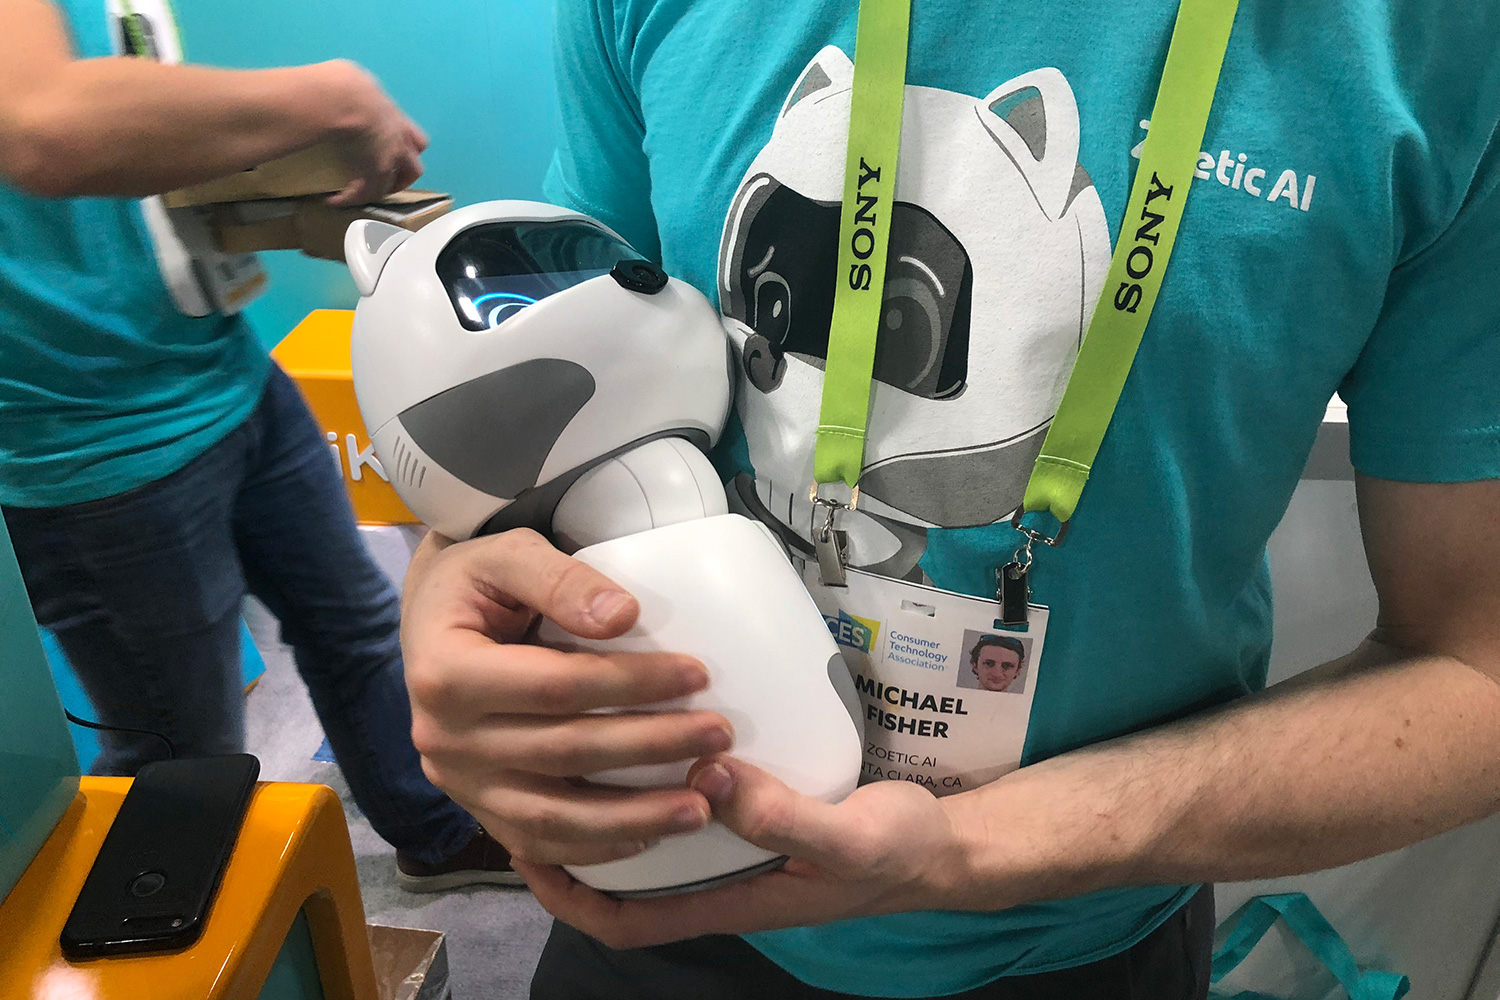 cutest companion robots ces 2019 zoetic kiki cradled